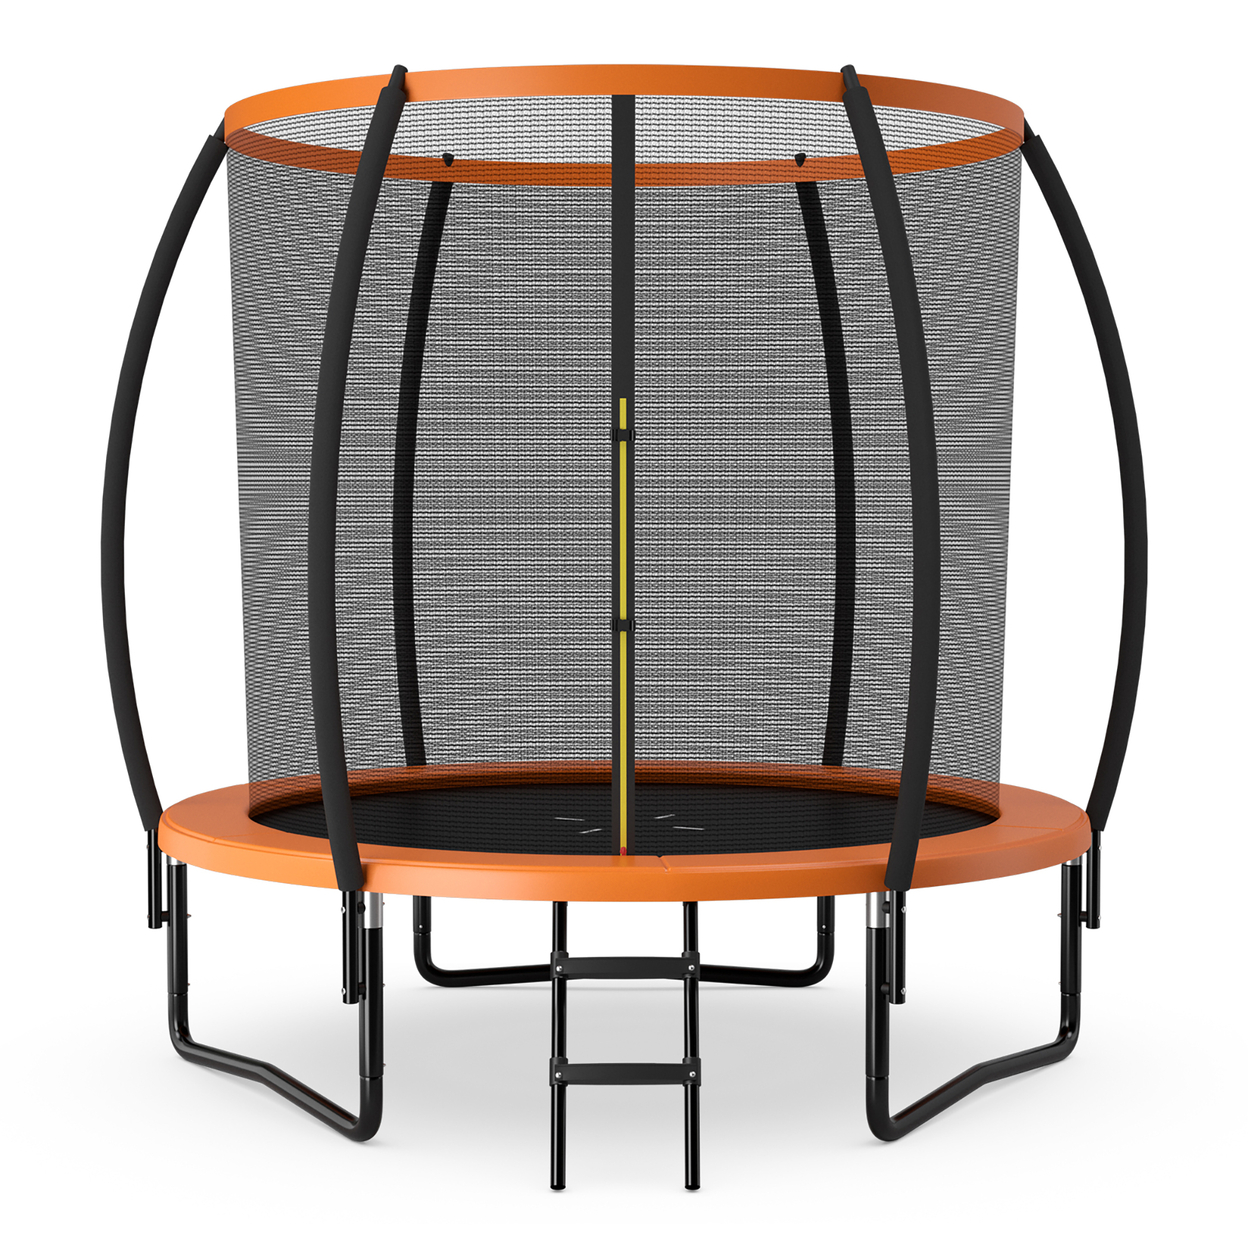 10FT Recreational Trampoline W/ Ladder Enclosure Net Safety Pad Outdoor - Orange